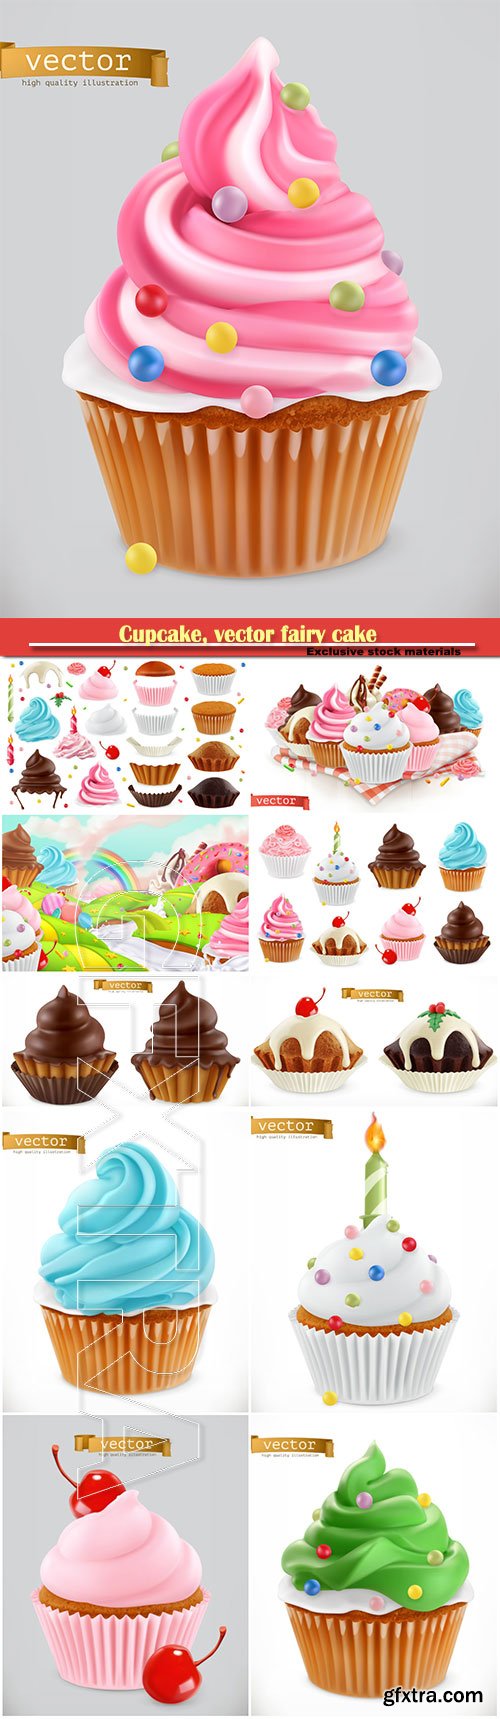 Cupcake, vector fairy cake, 3d realistic vector icon set